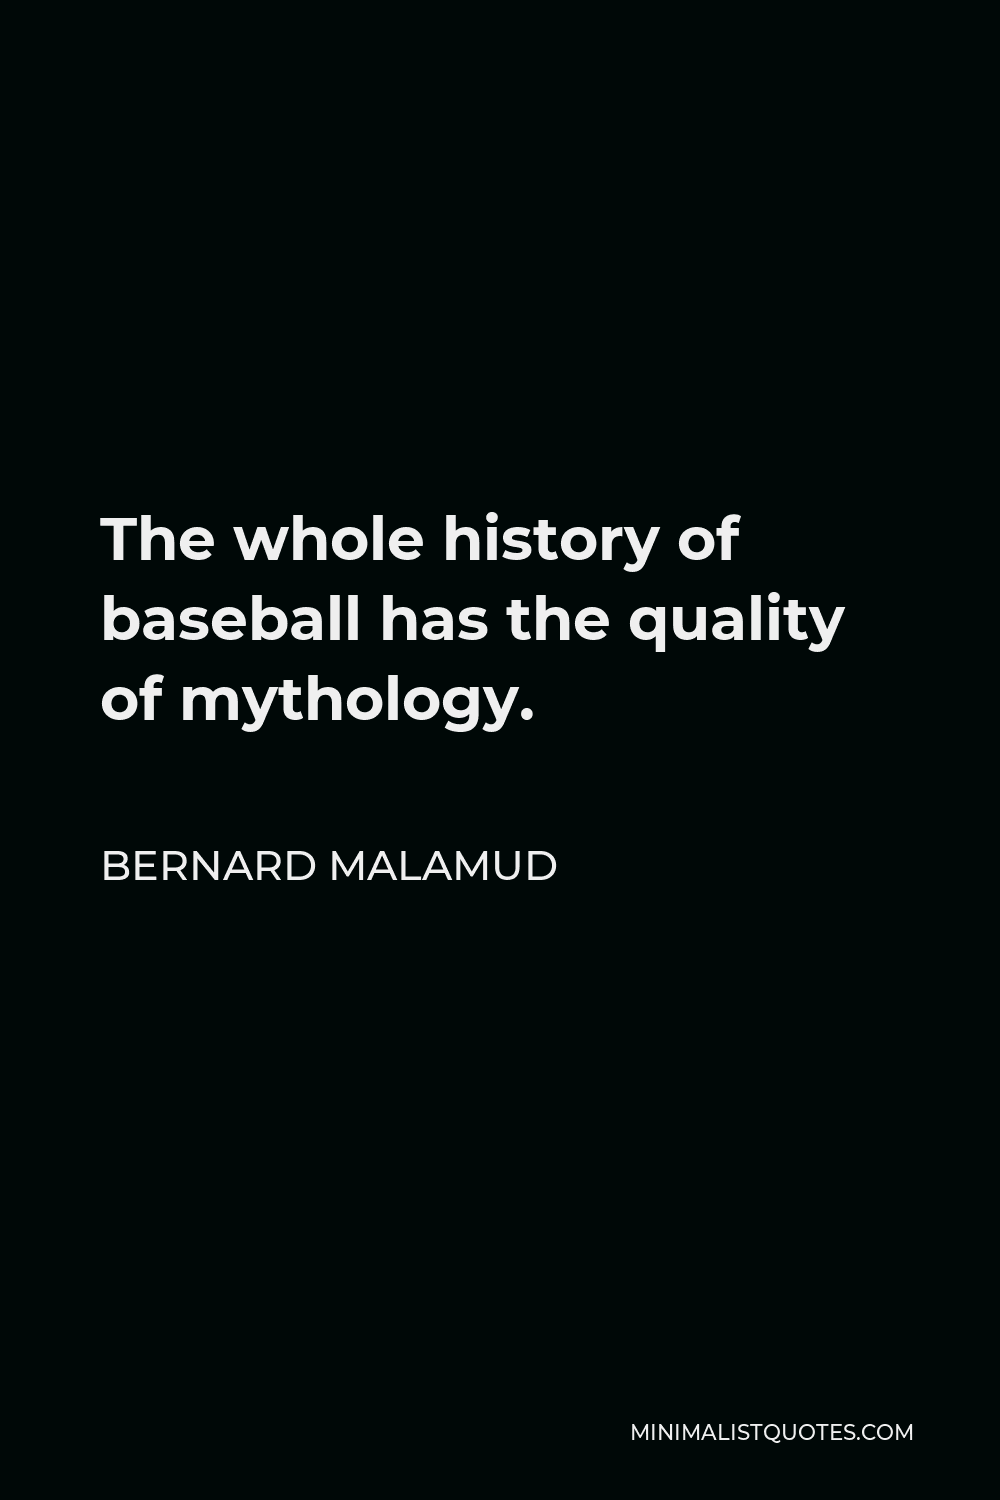 Bernard Malamud Quote - The whole history of baseball has the quality of mythology.